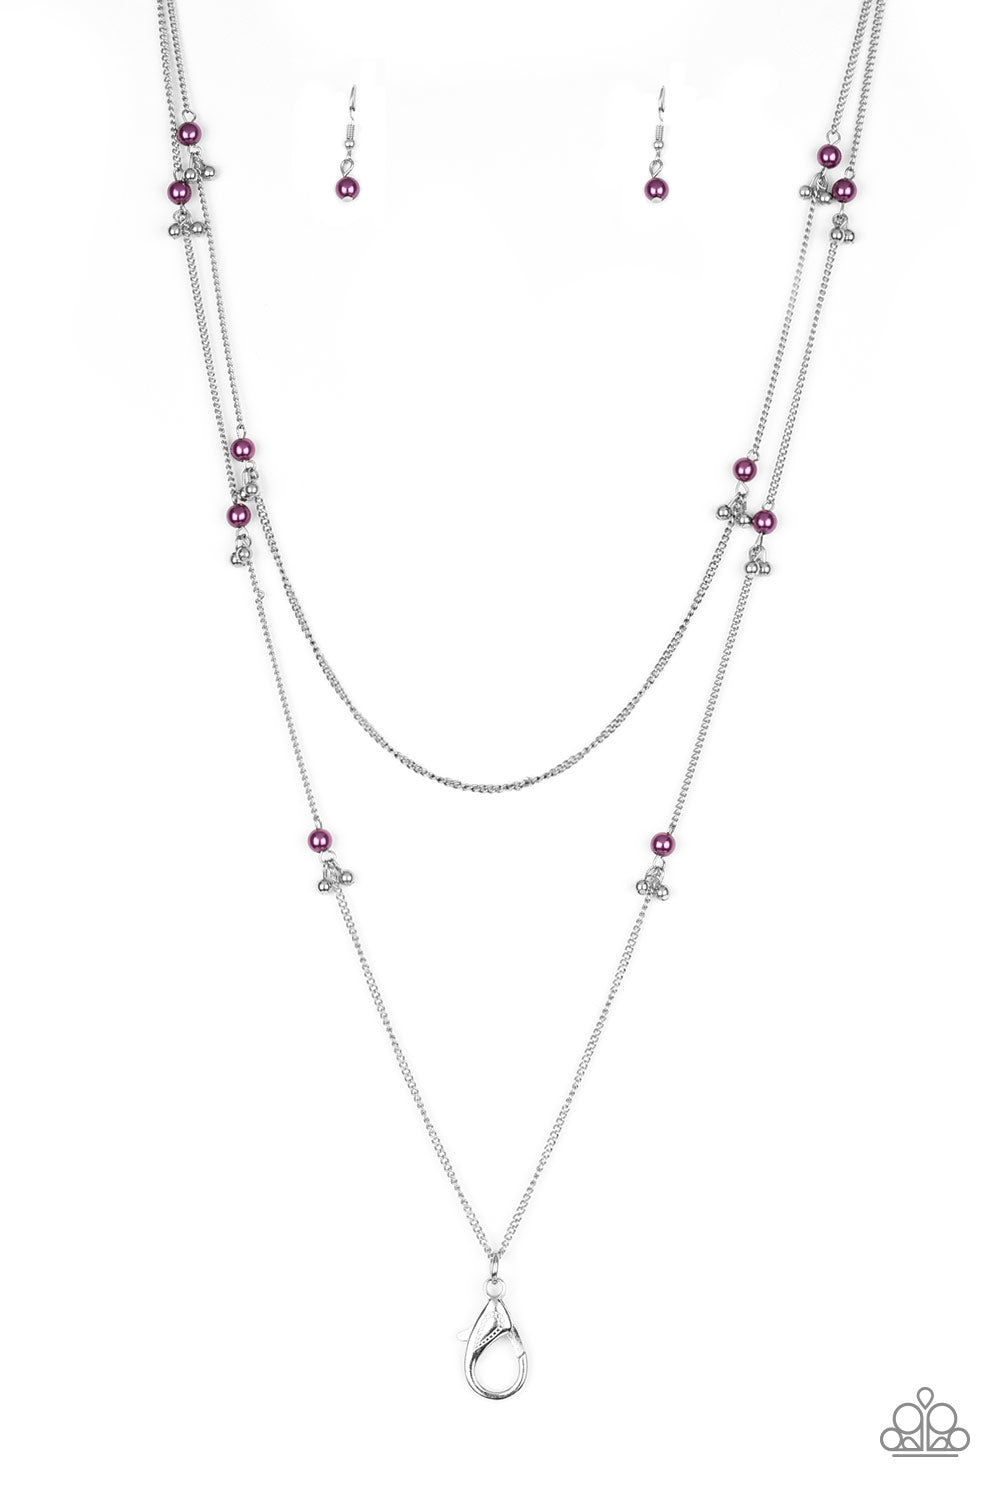 Ultrawealthy - Purple Lanyard Necklace Set - Princess Glam Shop